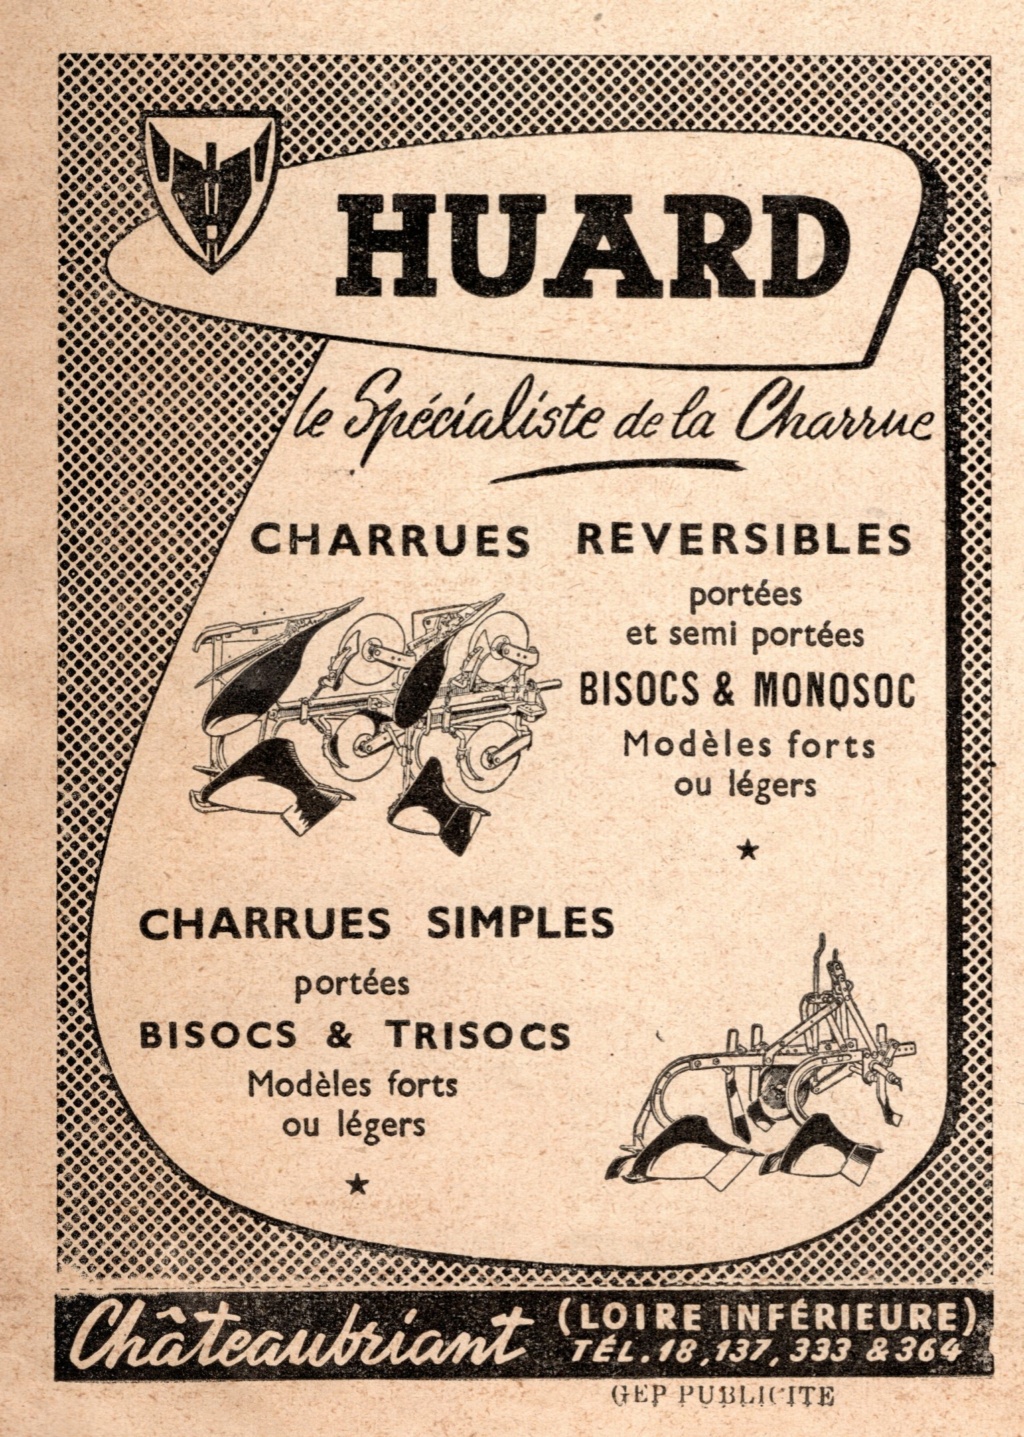 Charrues brabants HUARD FRERES - Chateaubriant-  Img20455